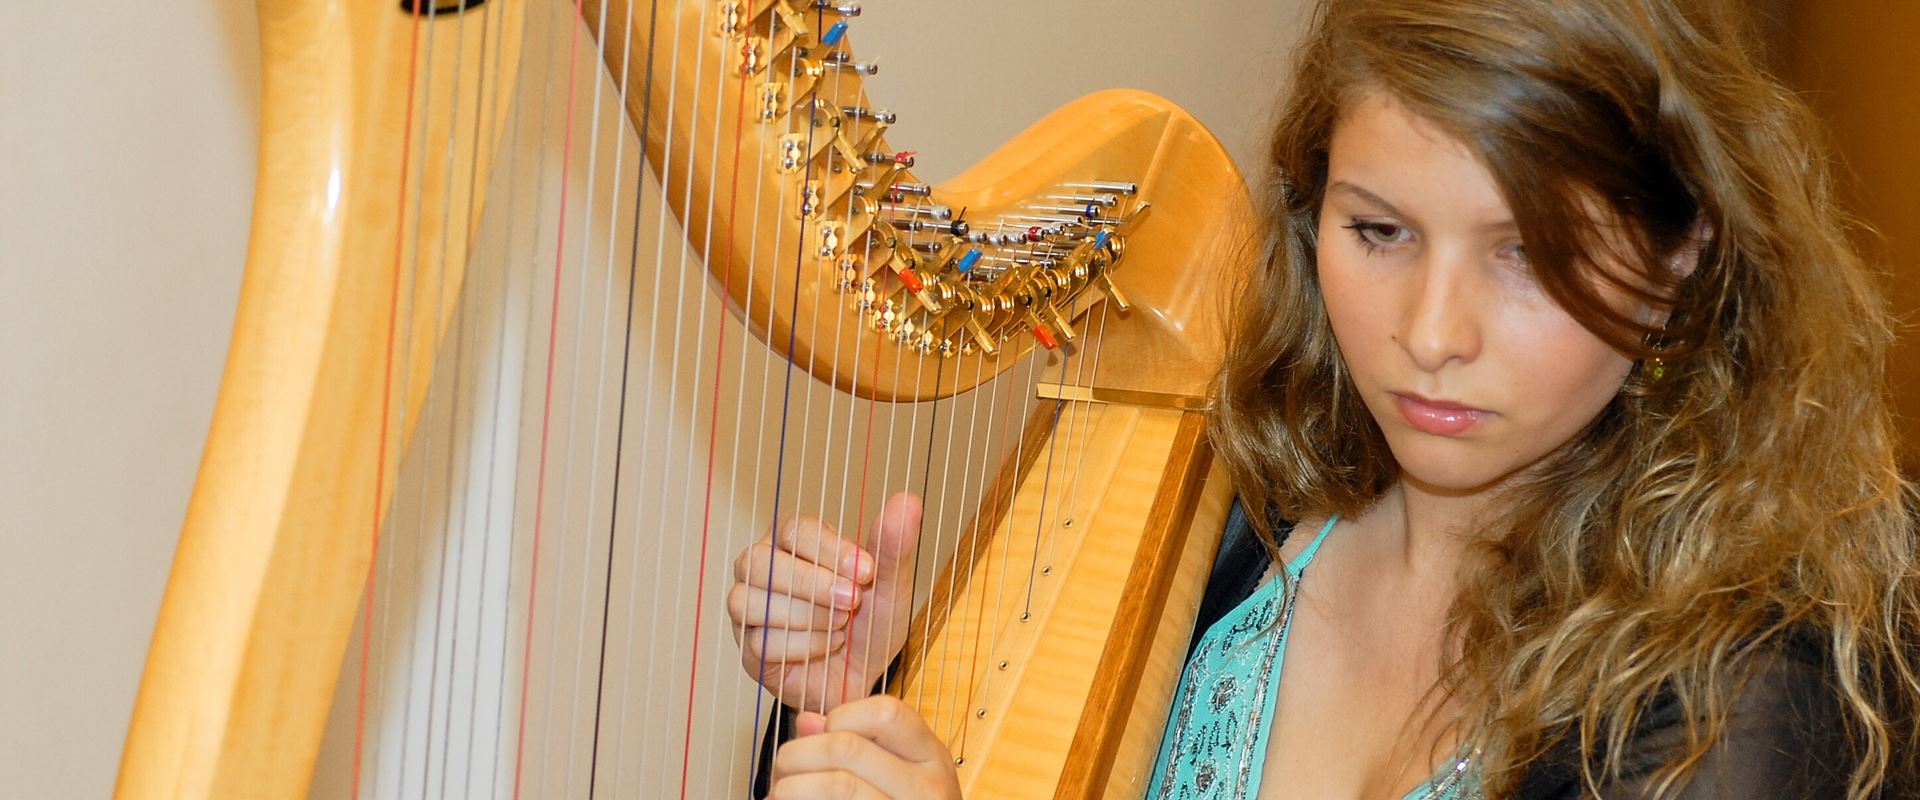 Harp lessons in the music school Bertheau & Morgenstern